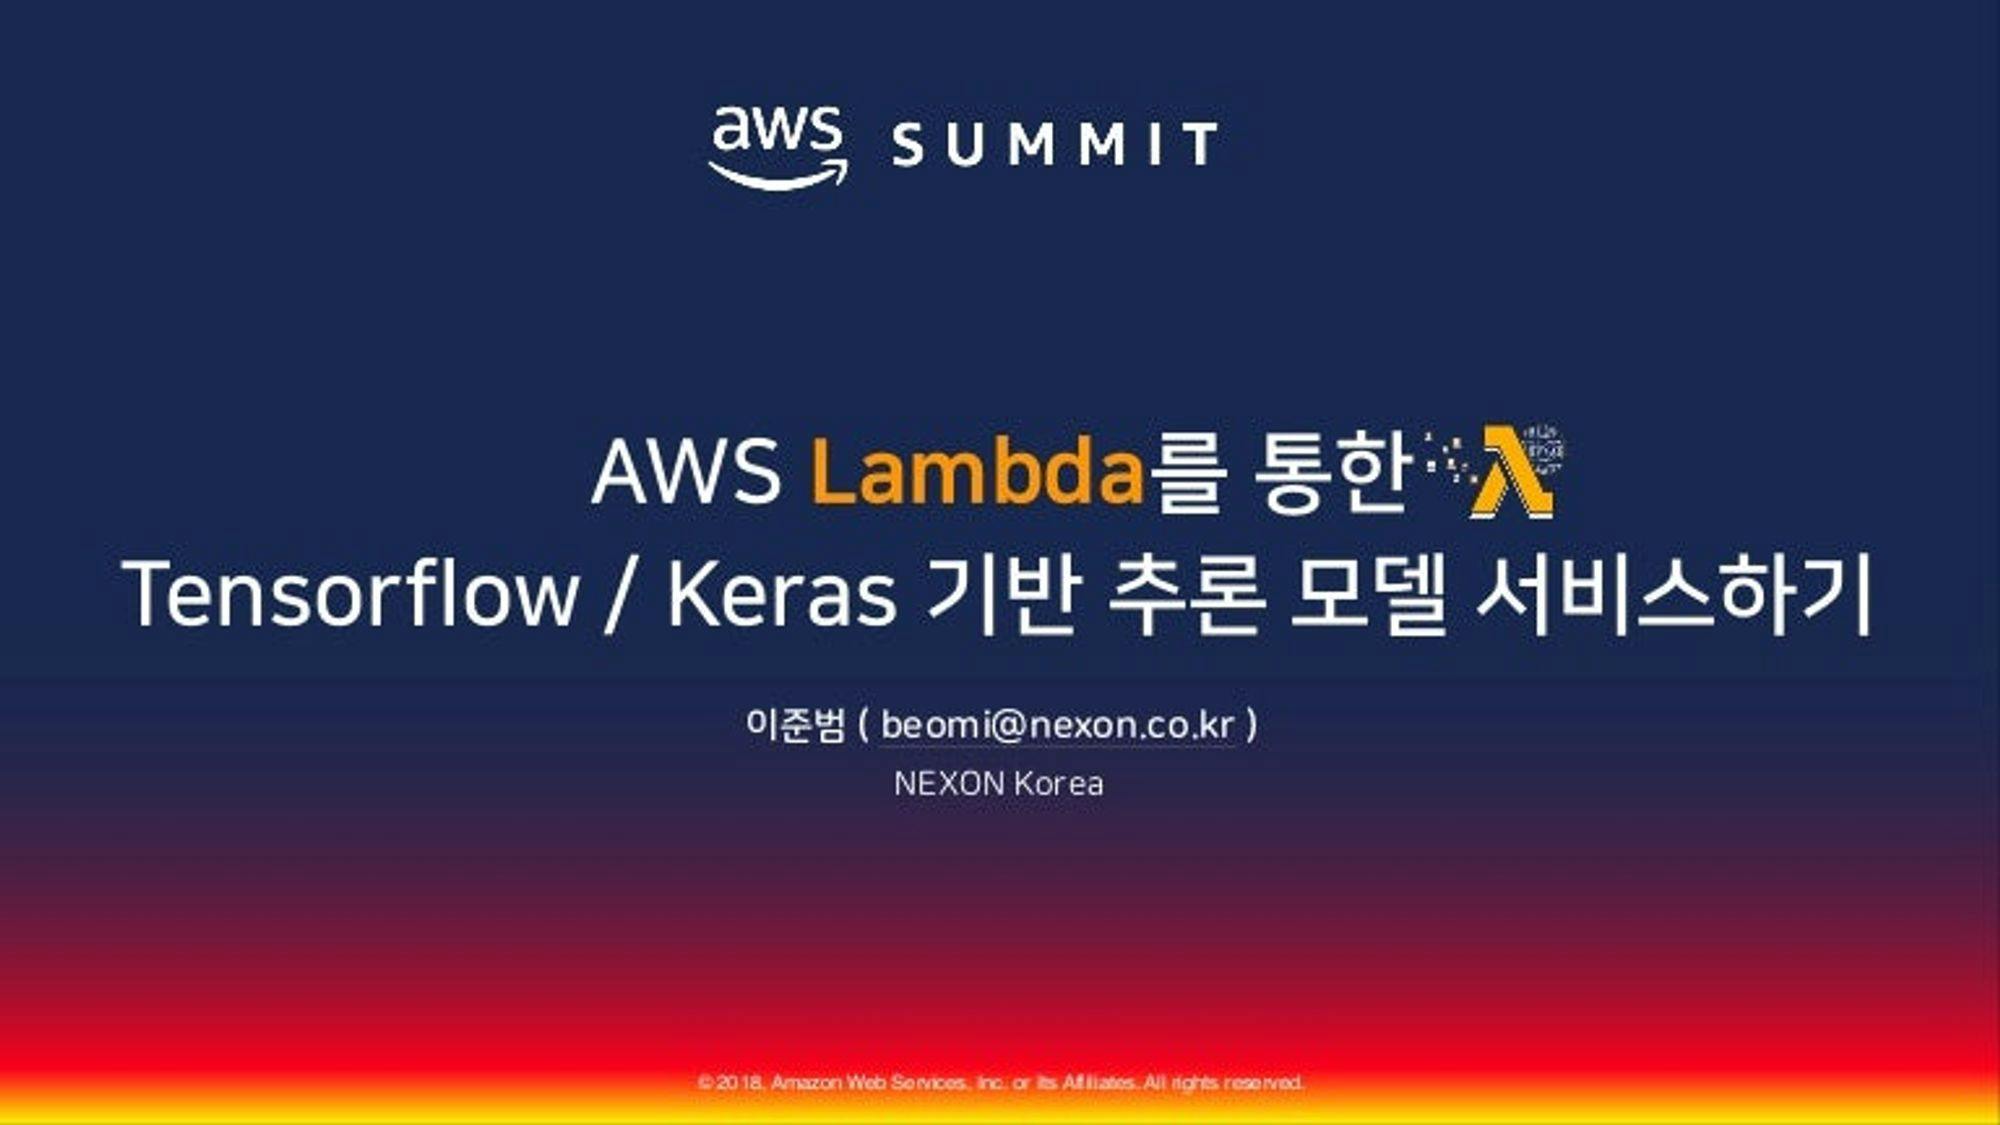 AWS Lambda를 통한 Tensorflow 및 Keras 기반 추론 모델 서비스하기 :: 이준범 :: AWS Summit Seoul 2018